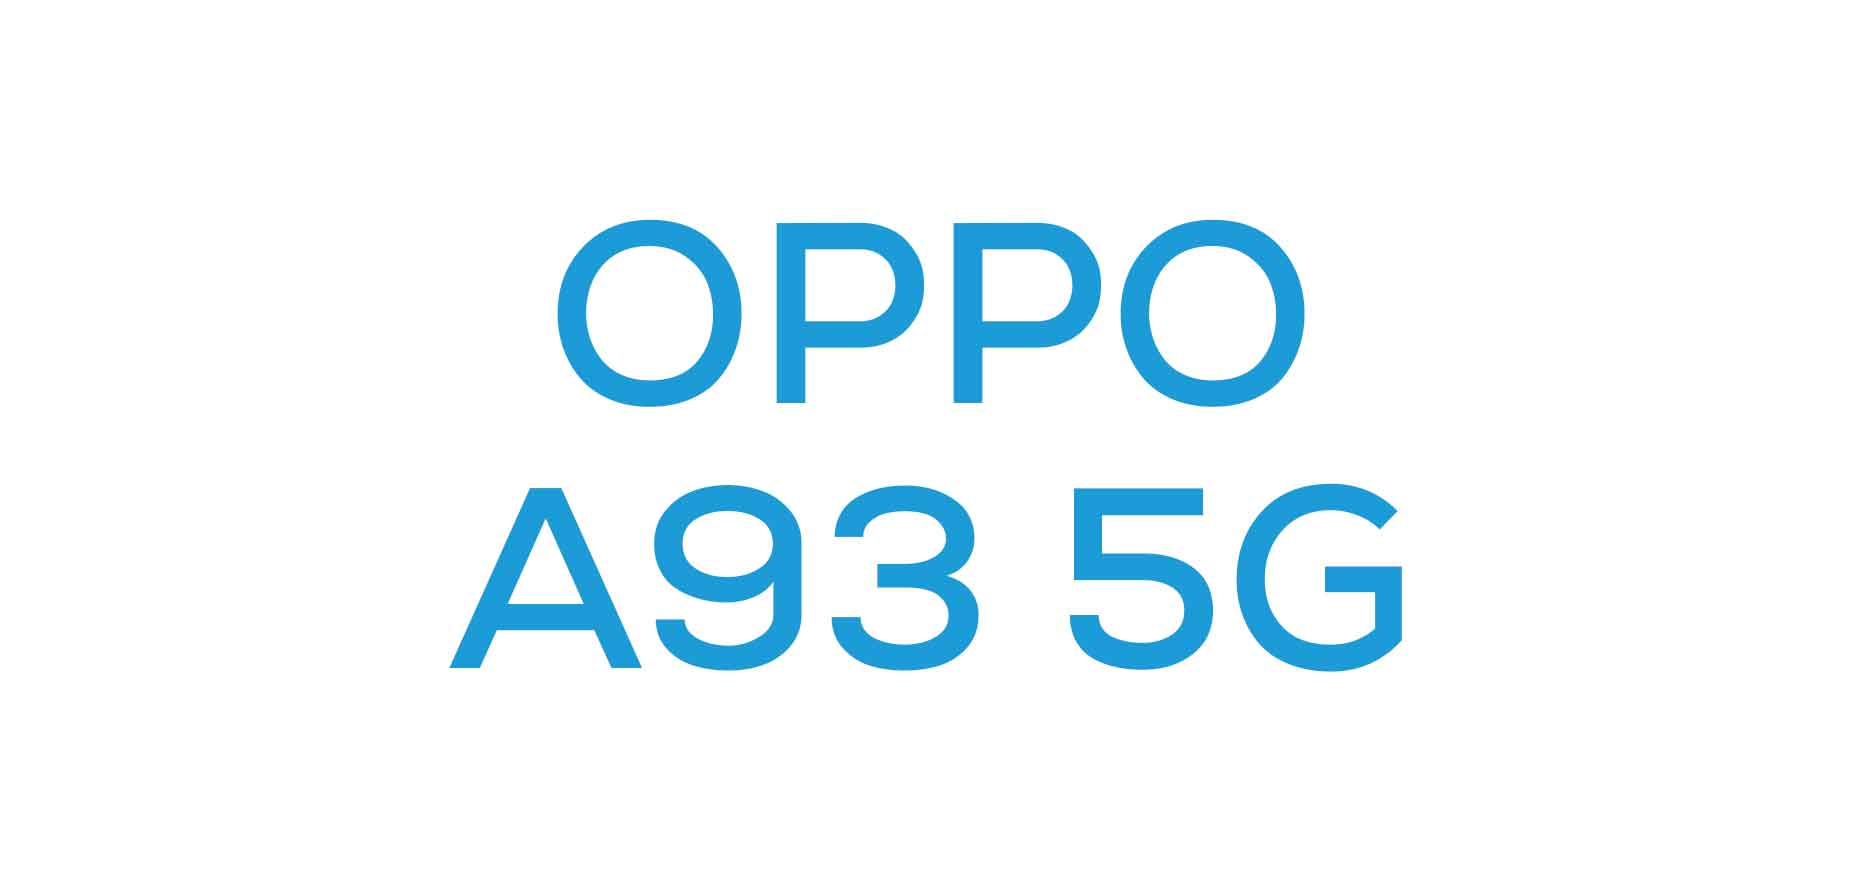 OPPO A93 5G